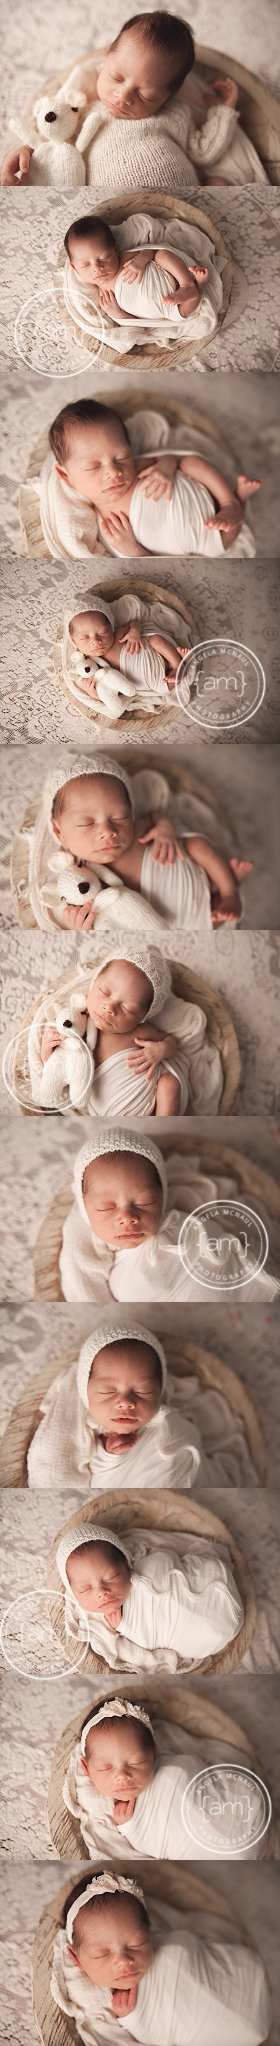 newborn photography session Palmyra_0237.jpg